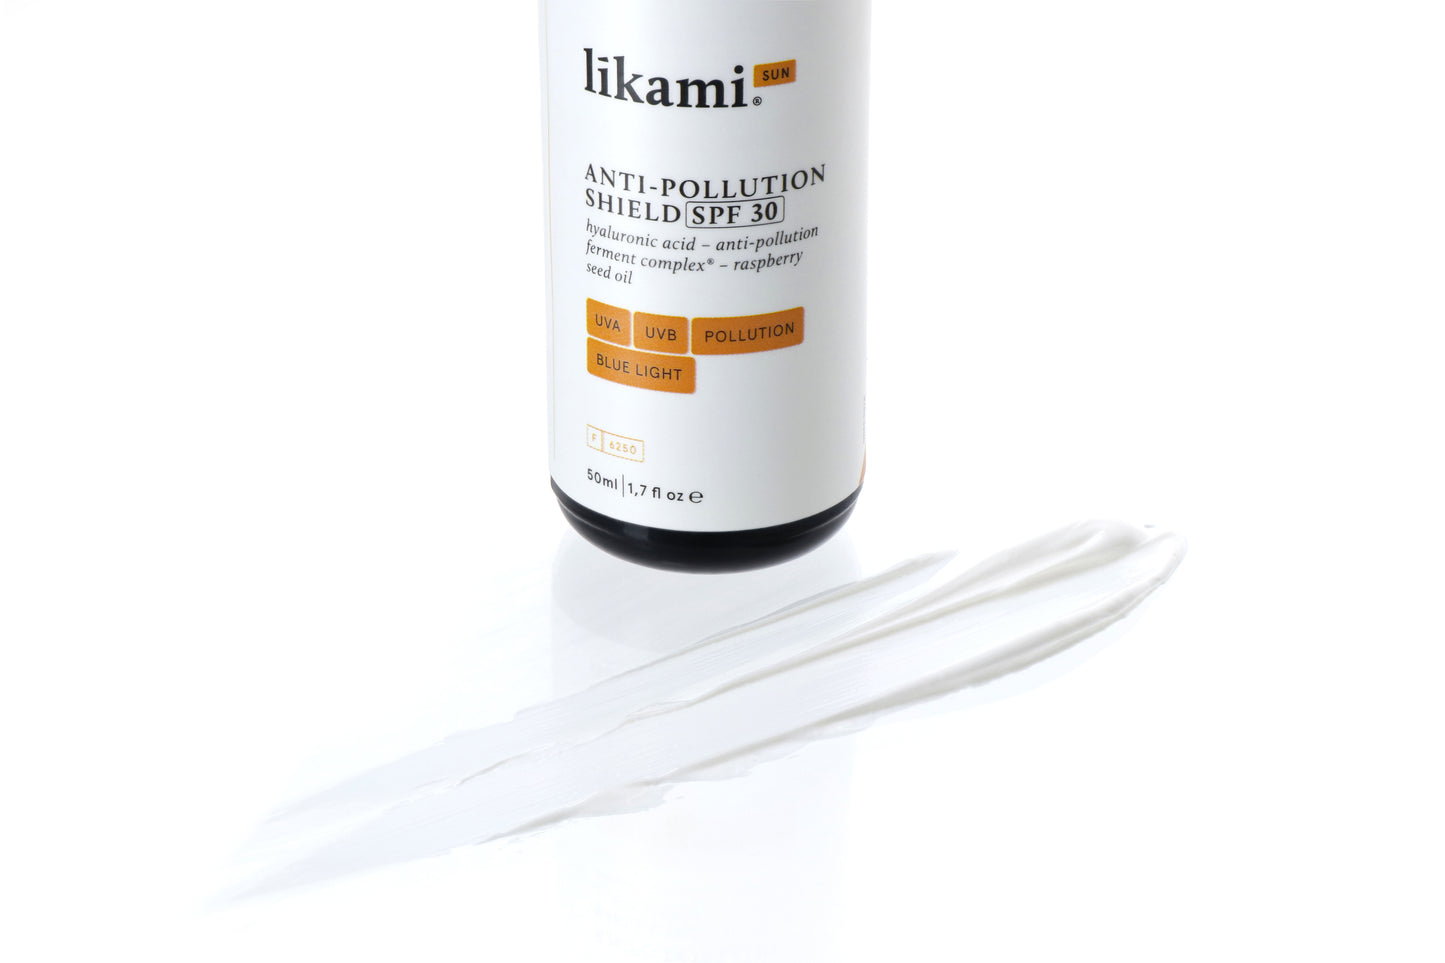 Likami - ANTI-POLLUTION SHIELD SPF30 (50ml)